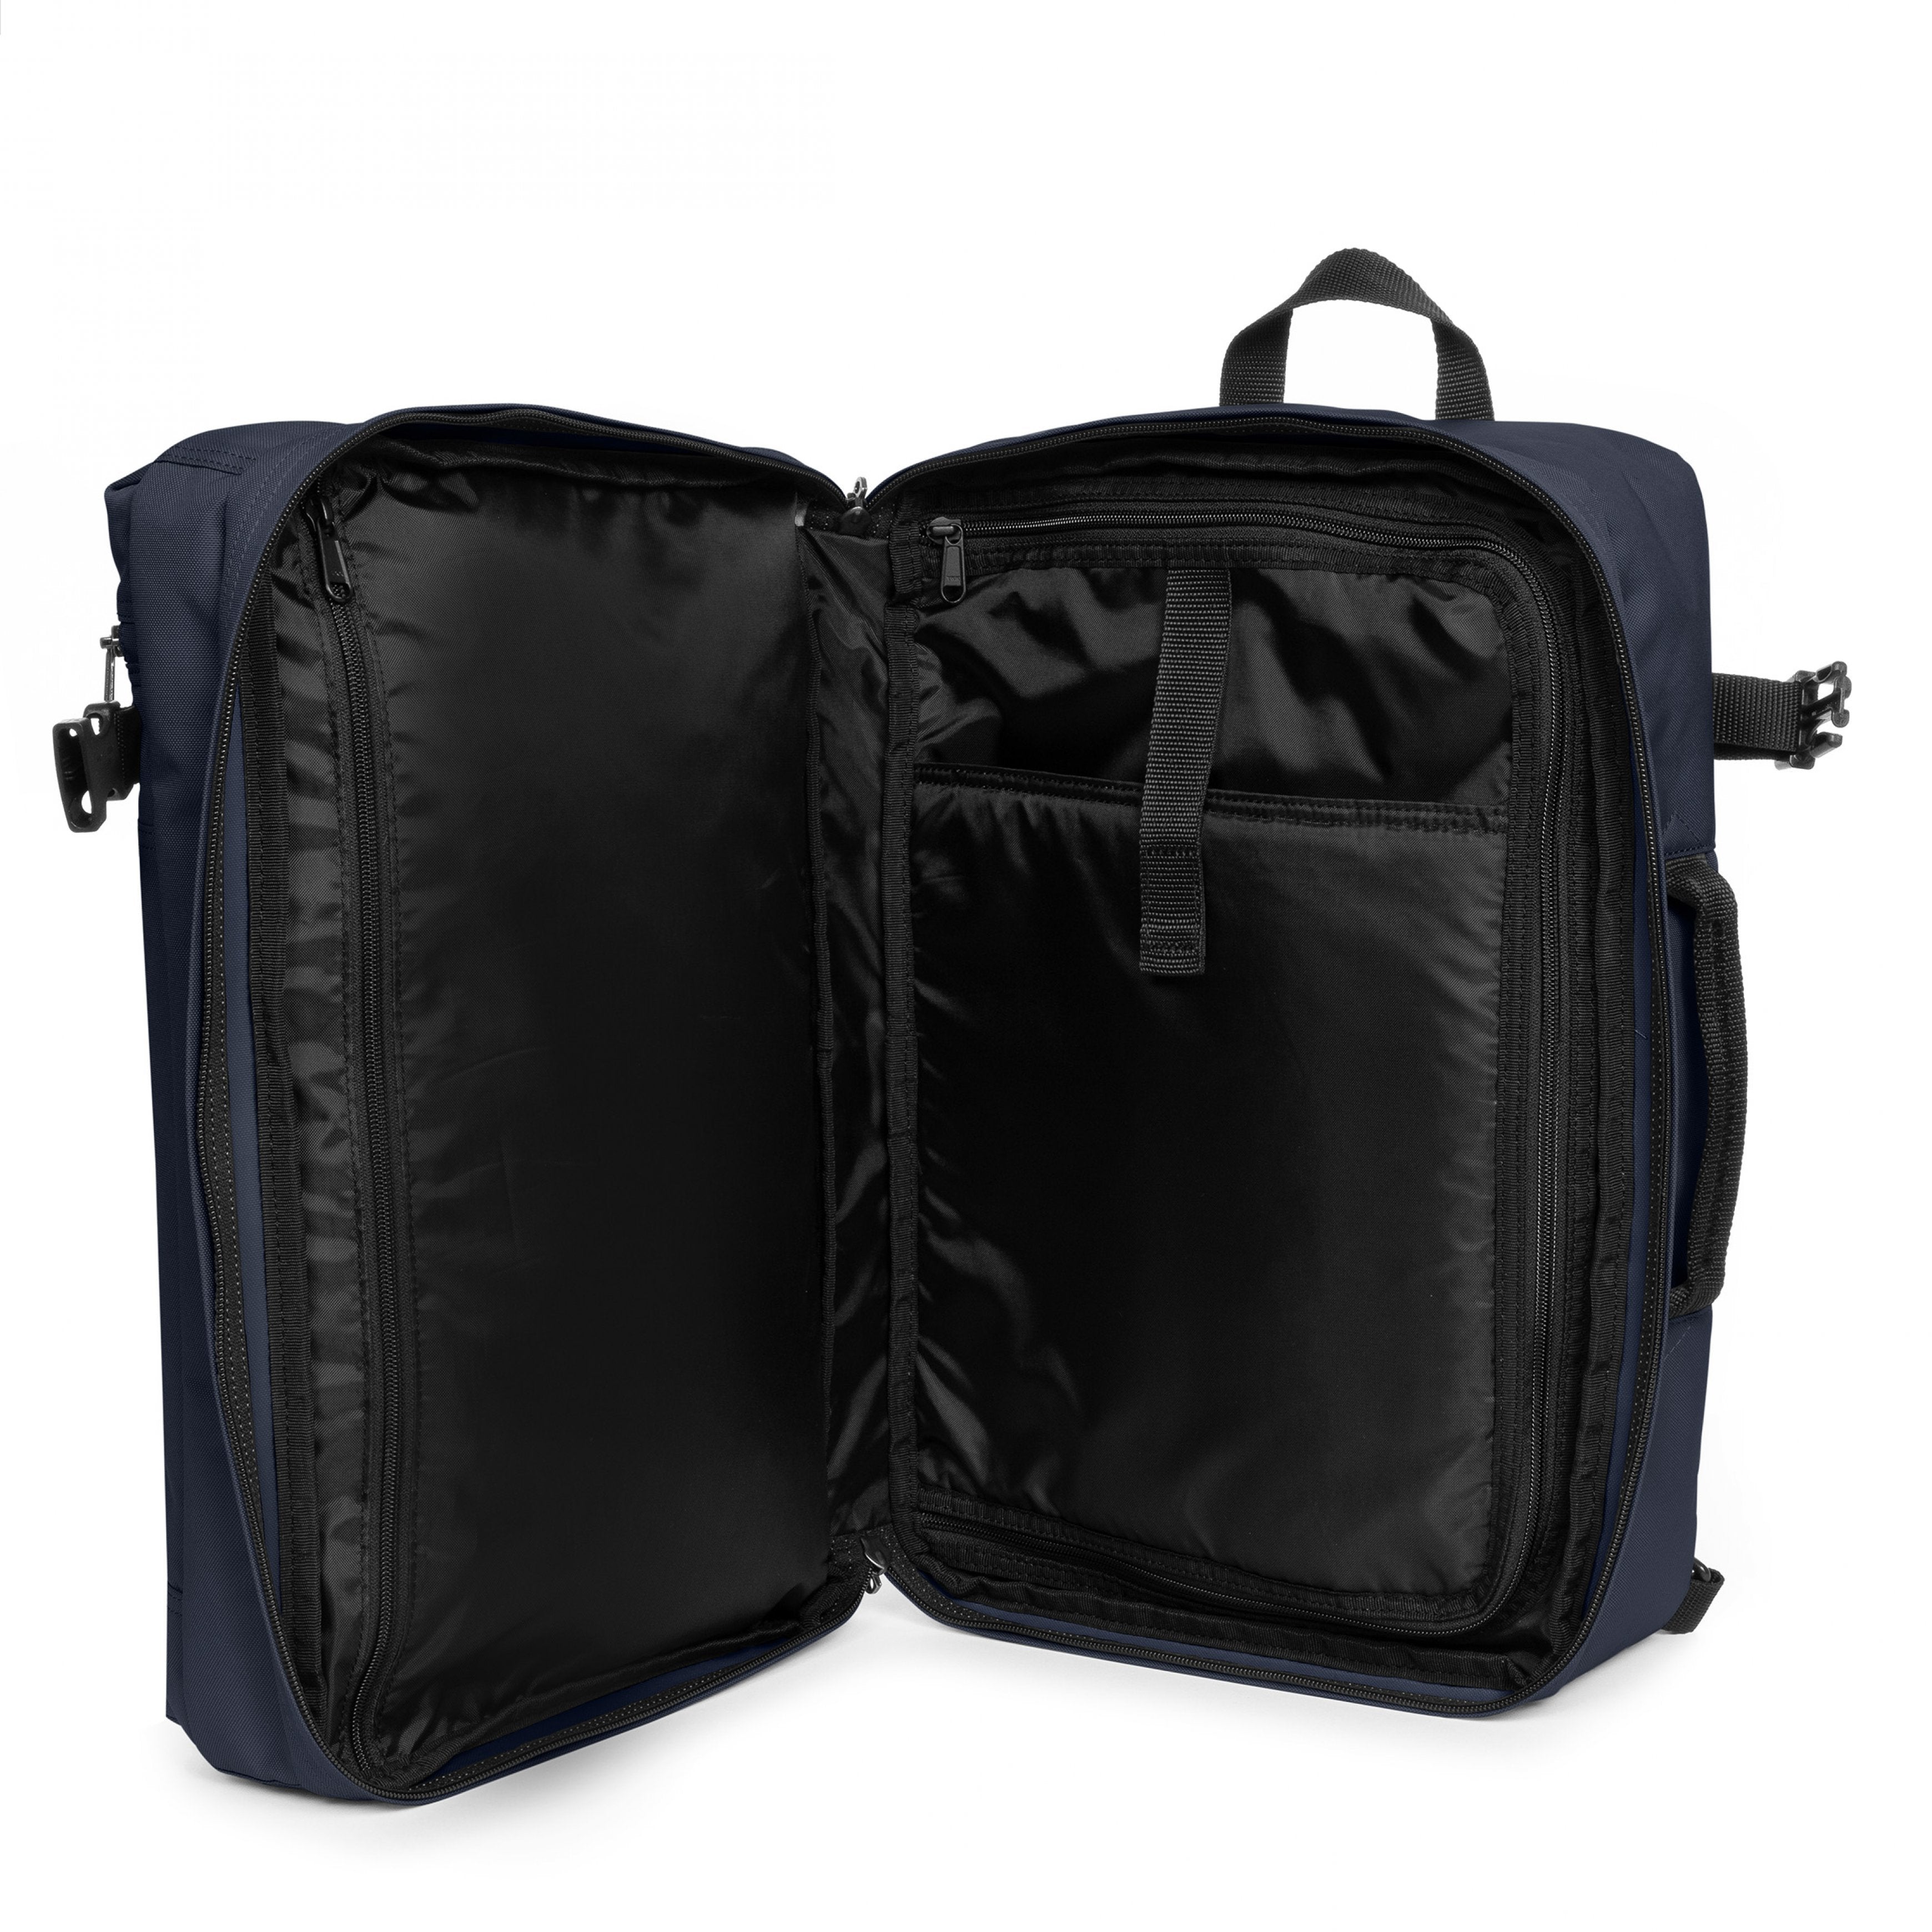 Eastpak-Transit'R Pack-Cabin sized convertible backpack-Ultra Marine-EK0A5BHIL831